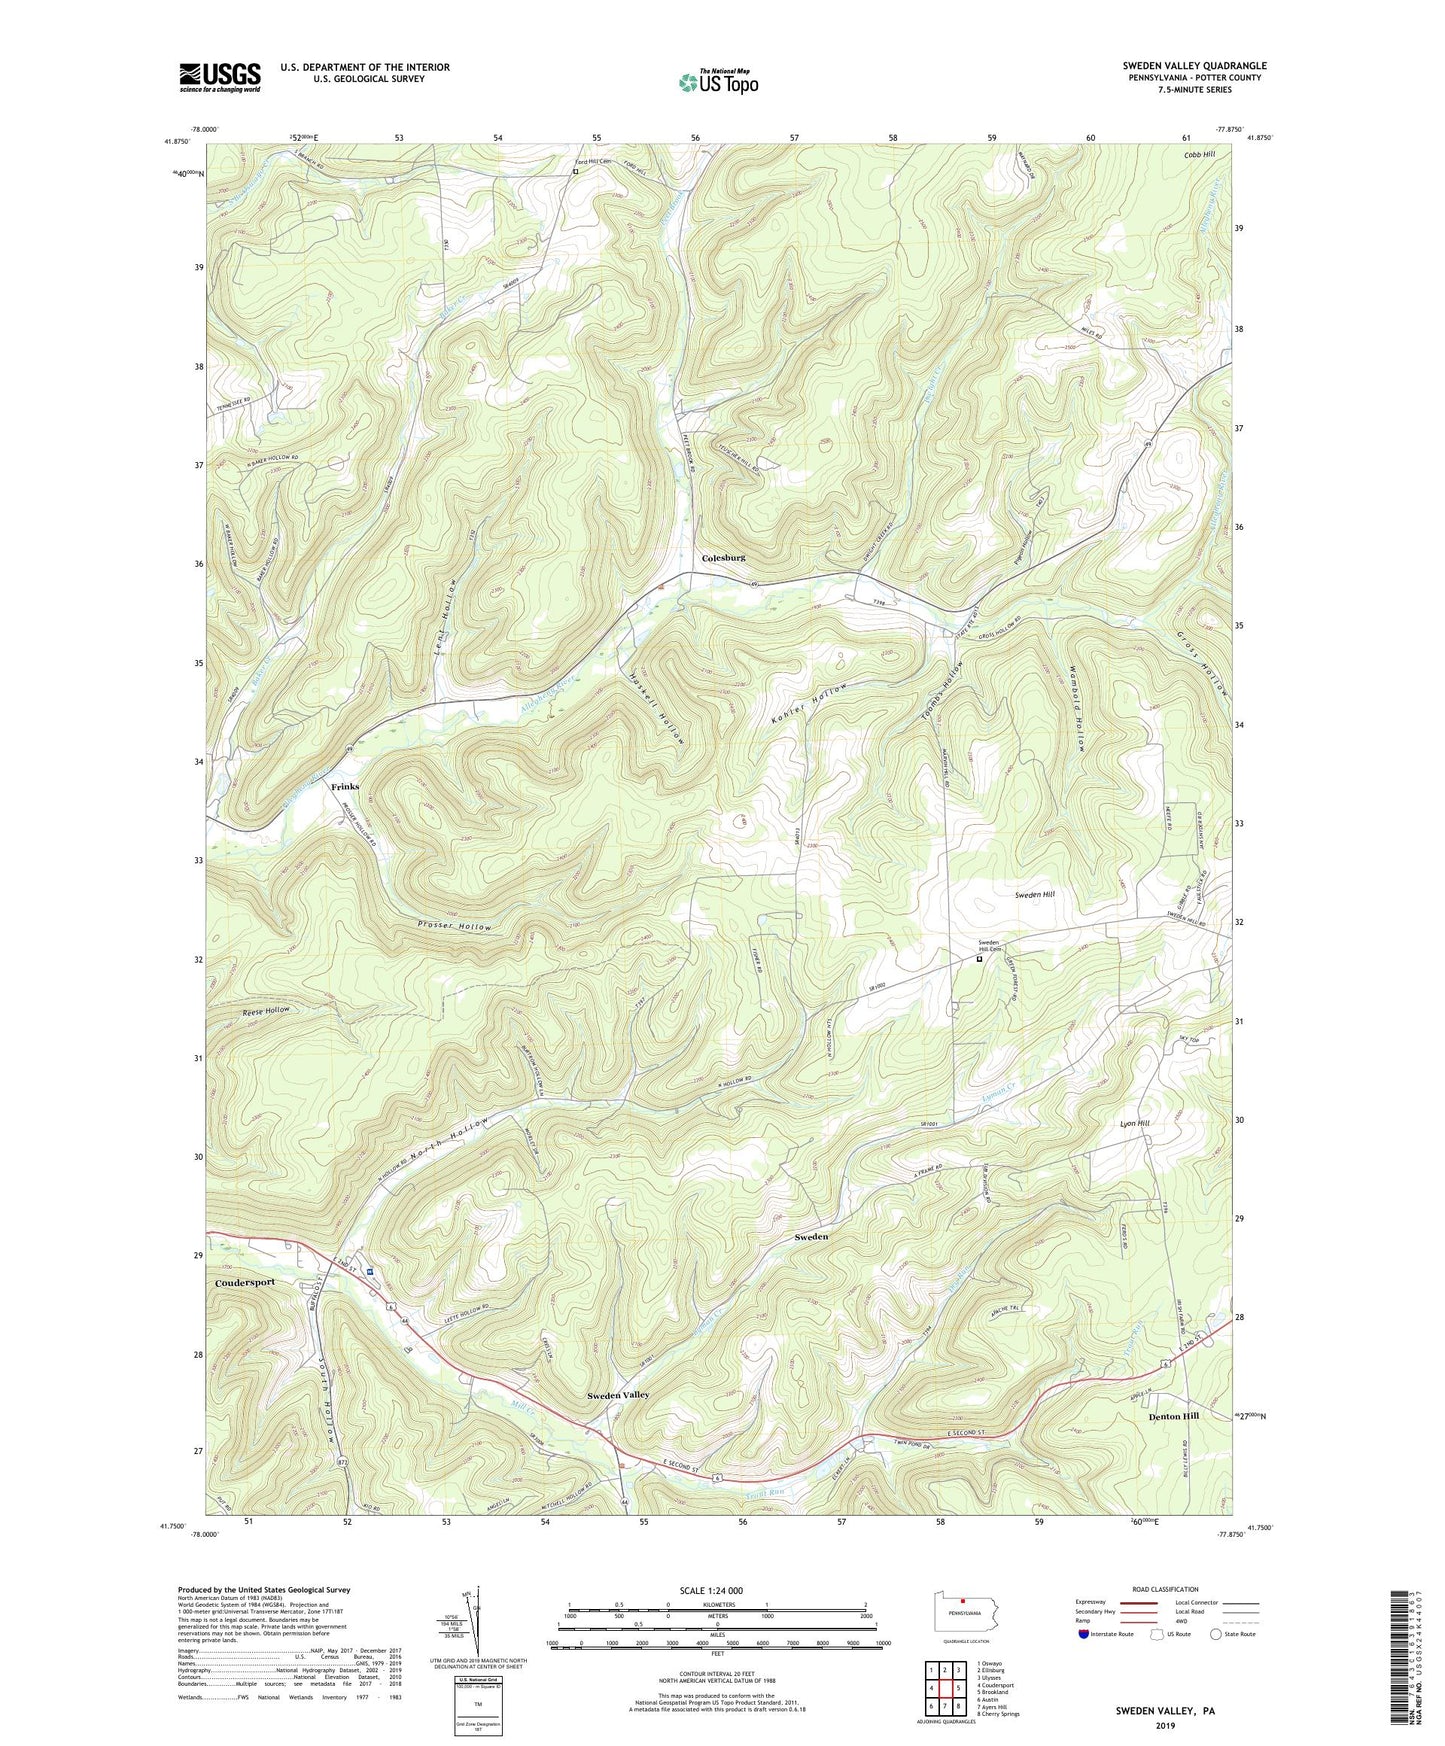 Sweden Valley Pennsylvania US Topo Map Image